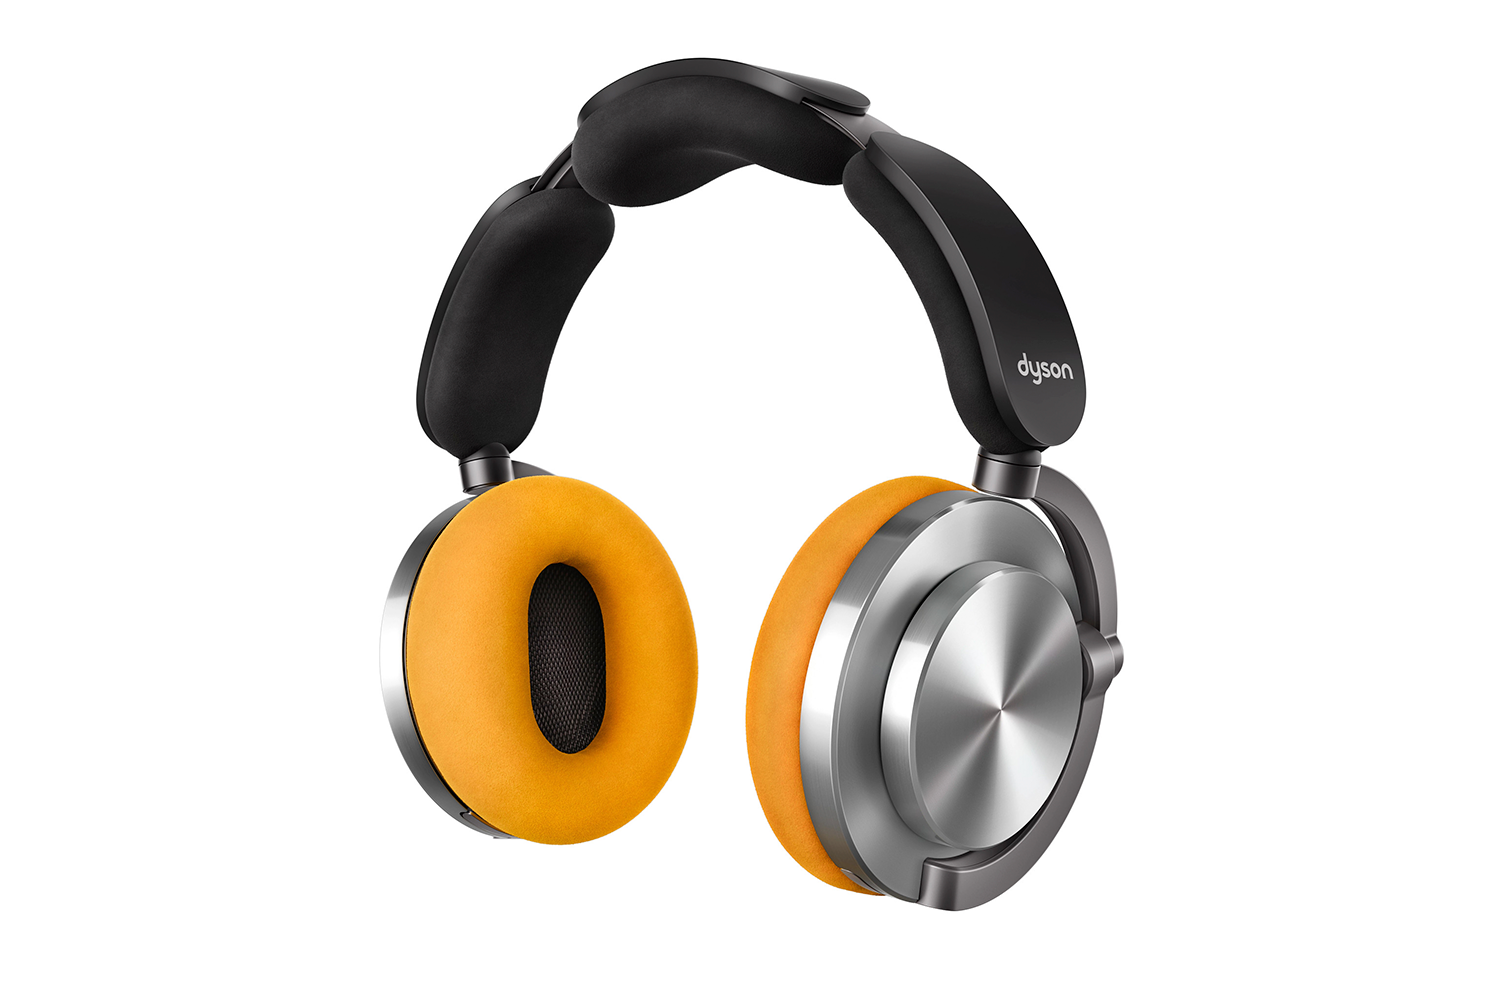 Dyson New Headphones OnTrac Wireless Hi-fi Apple Bose Sony Sennheiser Airpods Cambridge Audio Bowers Wilkins Kef